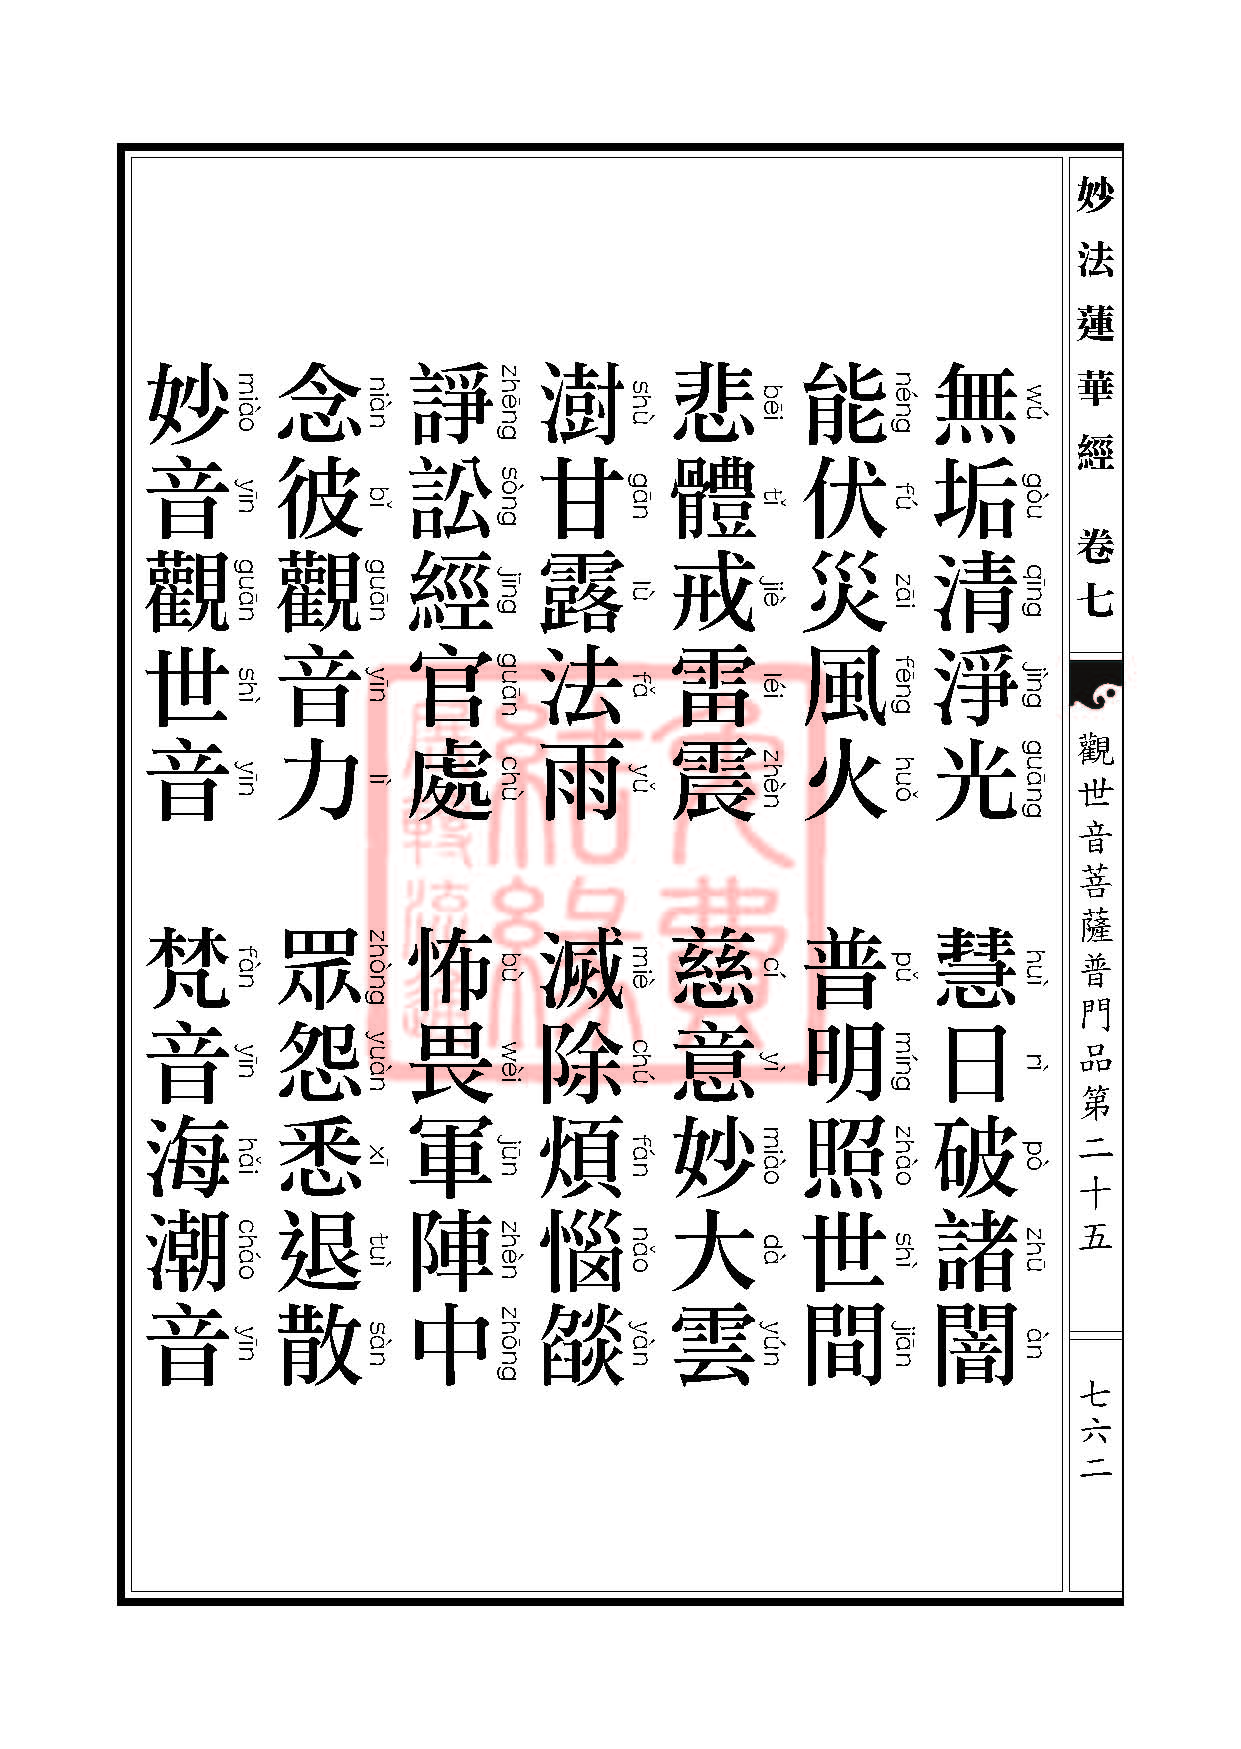 Book_FHJ_HK-A6-PY_Web_ҳ_762.jpg